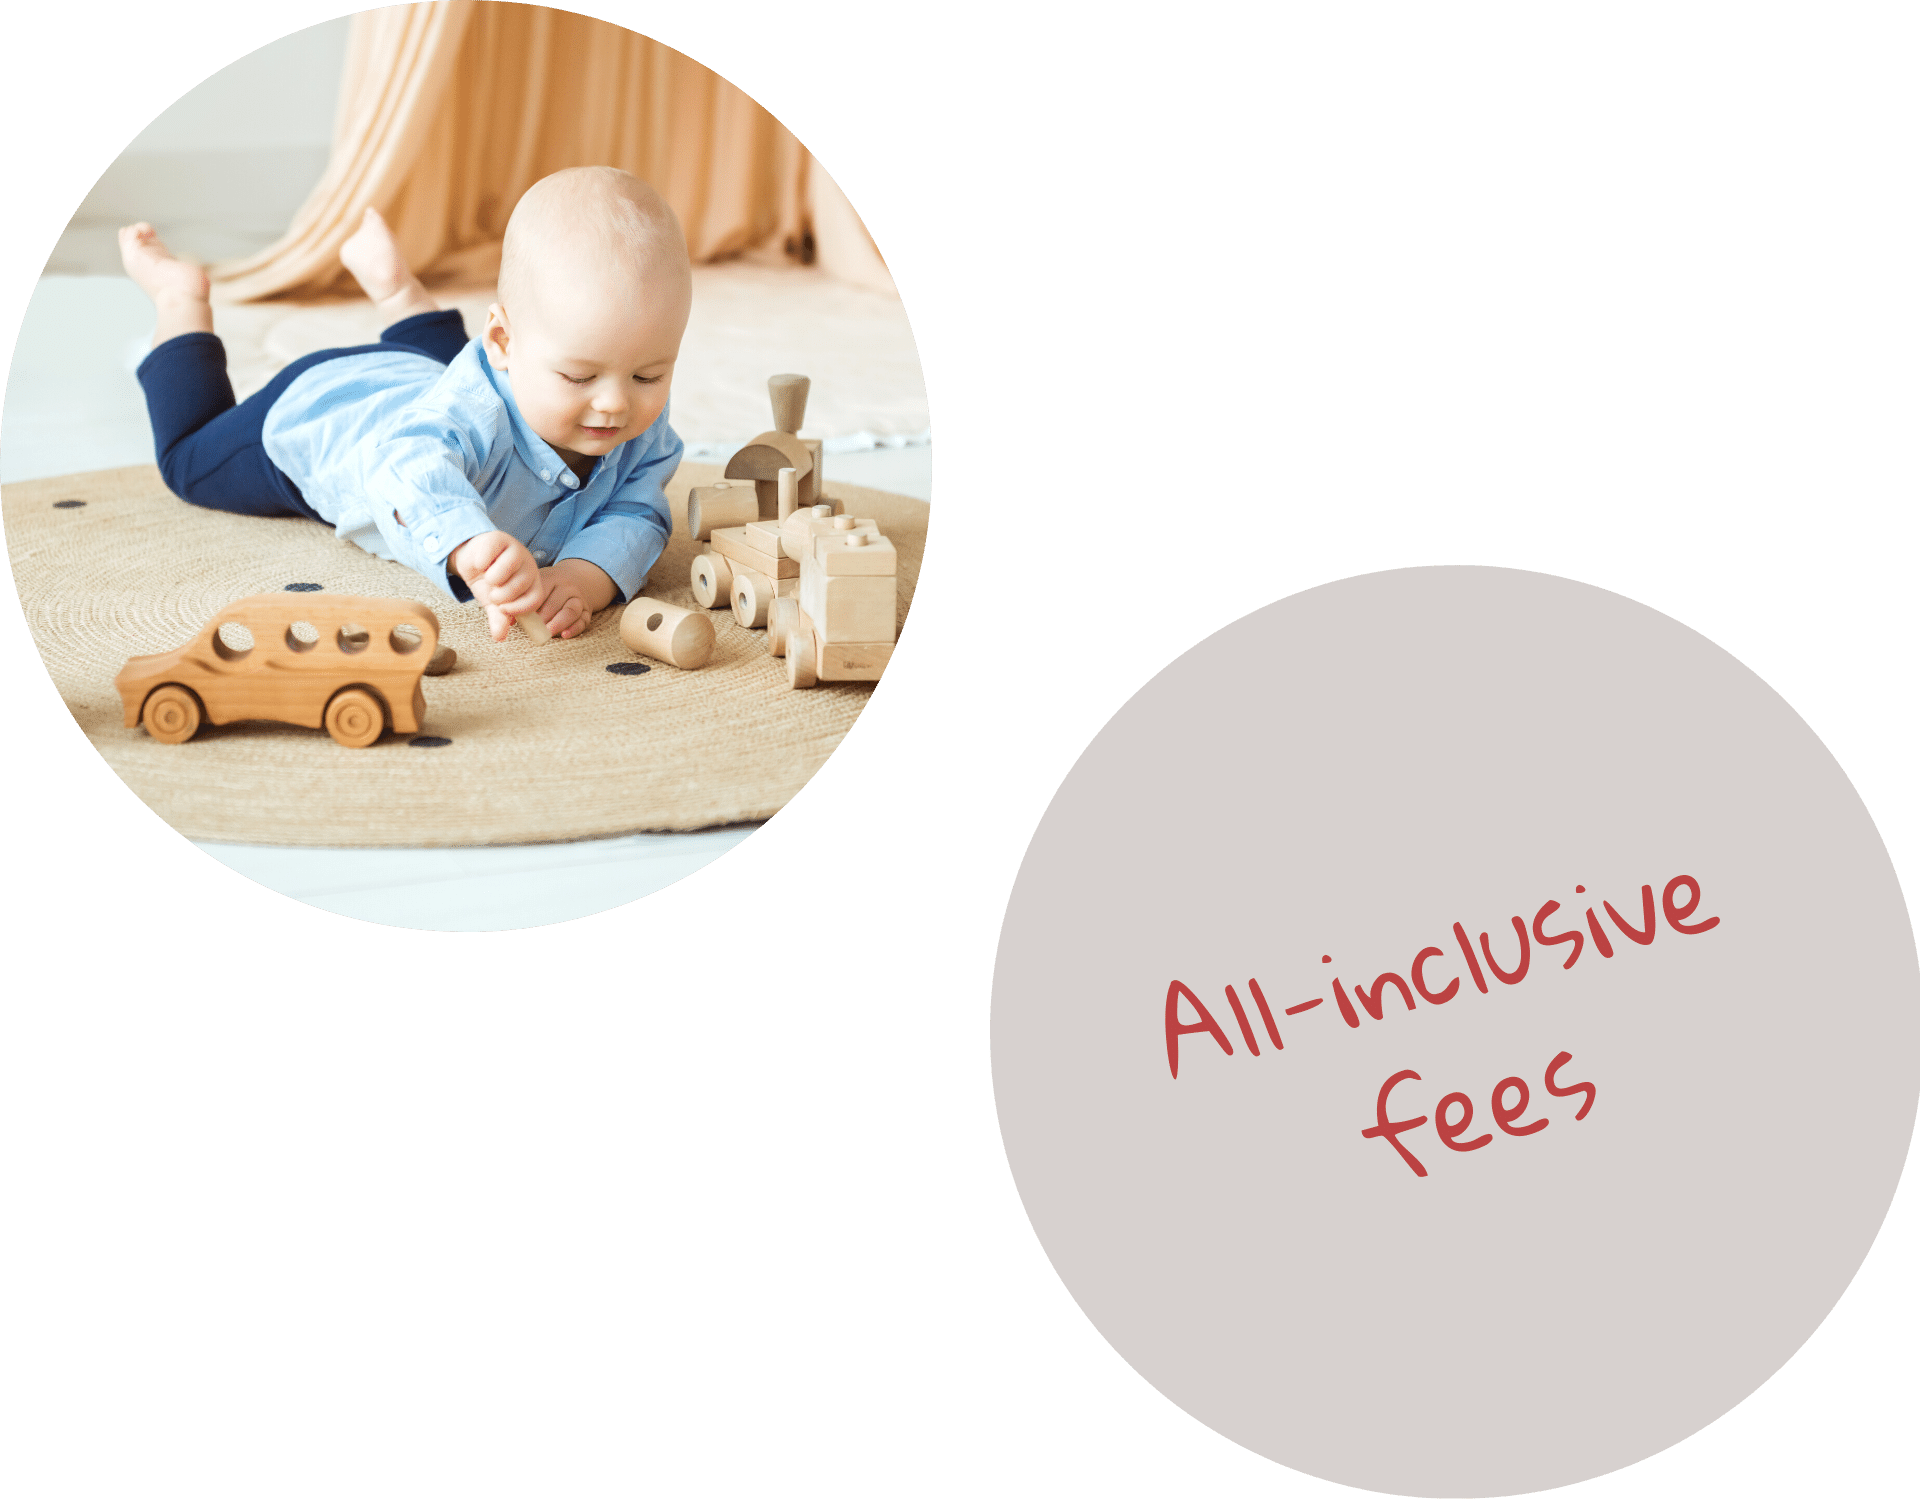 All-inclusive fees